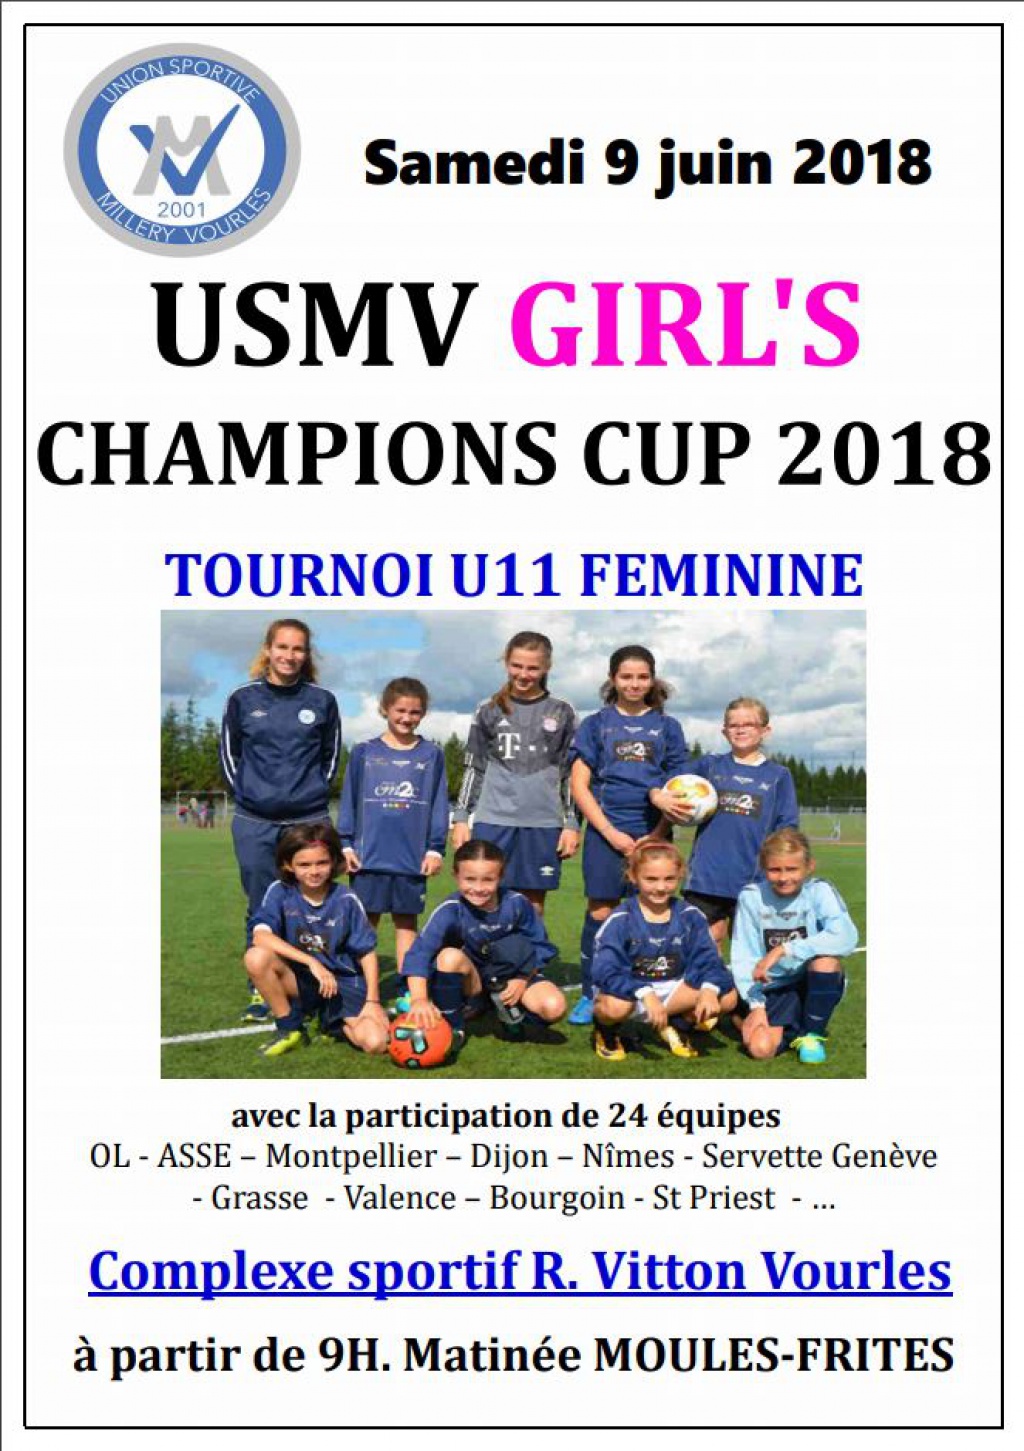 USMV GIRL'S CHAMPIONS CUP 2018 TOURNOI U11 FEMININE